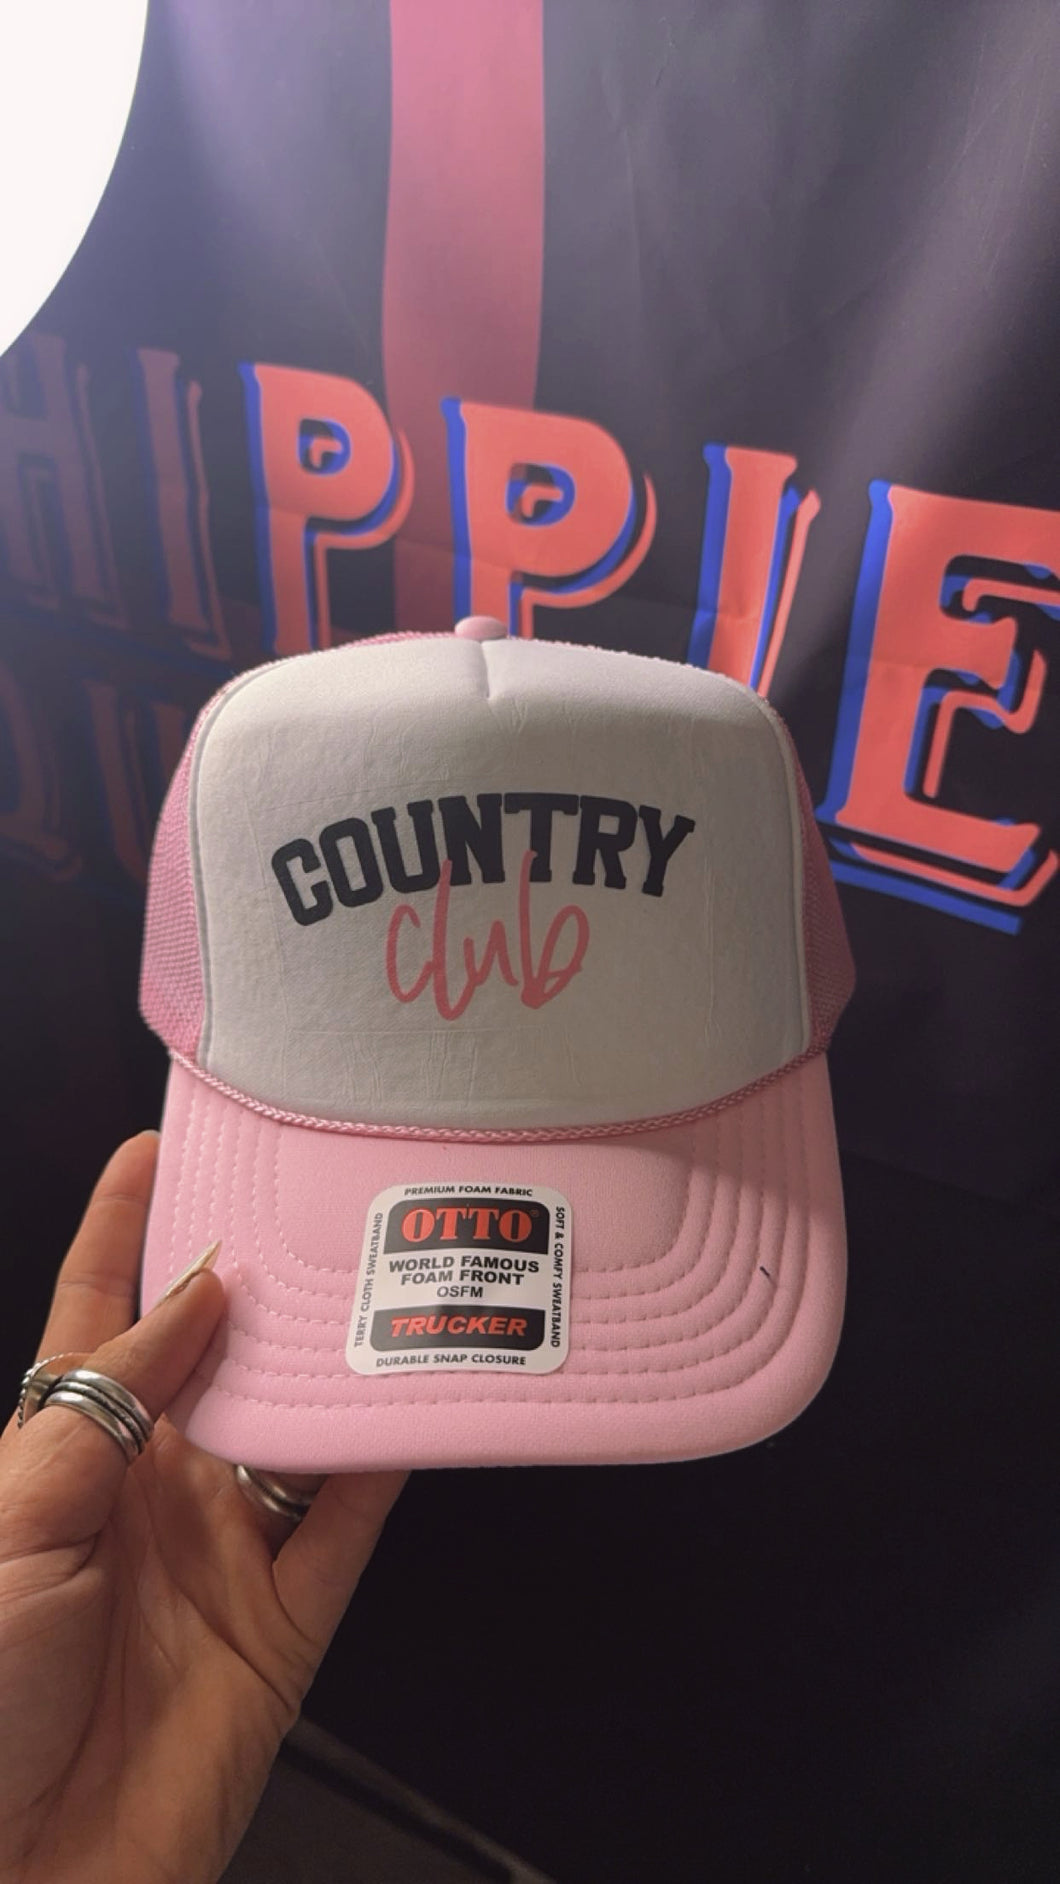 Country club Trucker cap